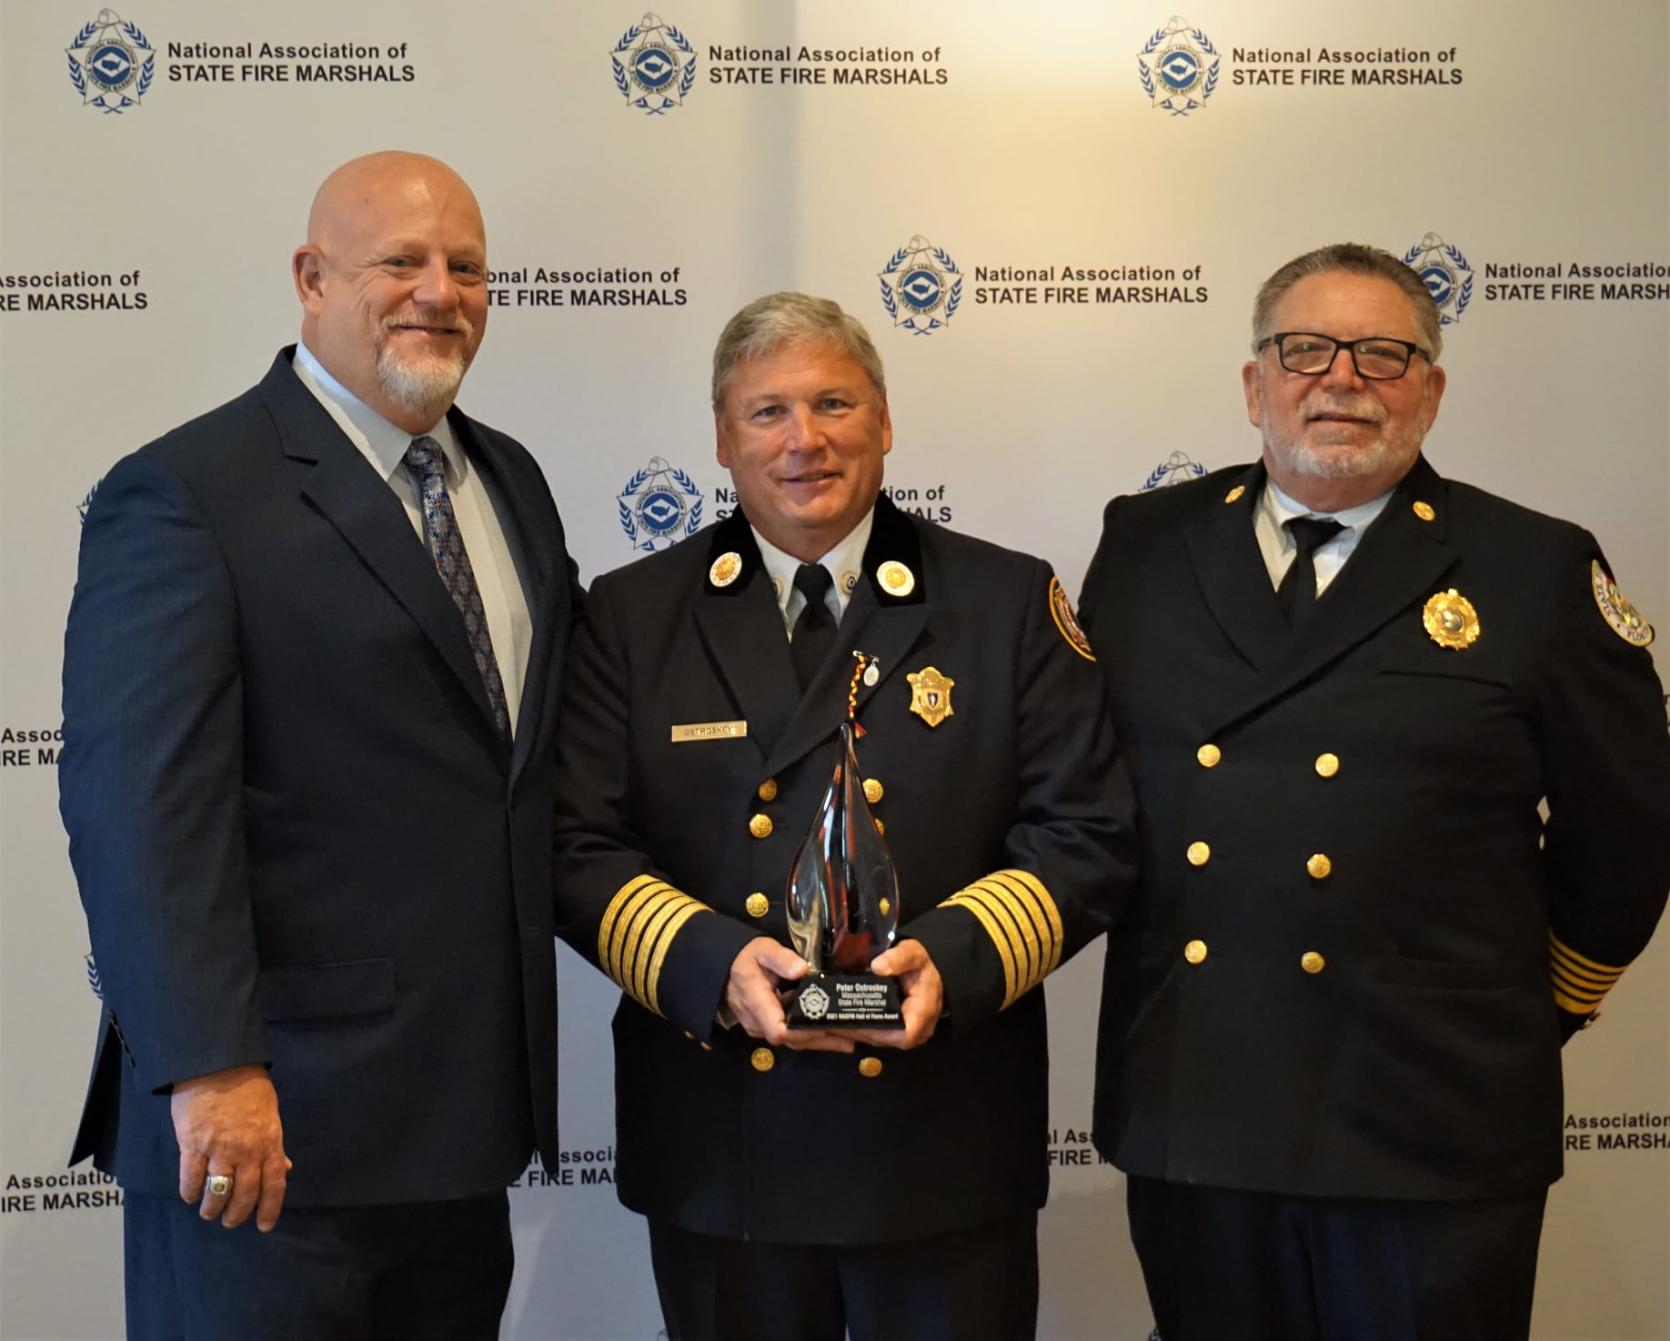 Photo of Massachusetts State Fire Marshal receiving an award